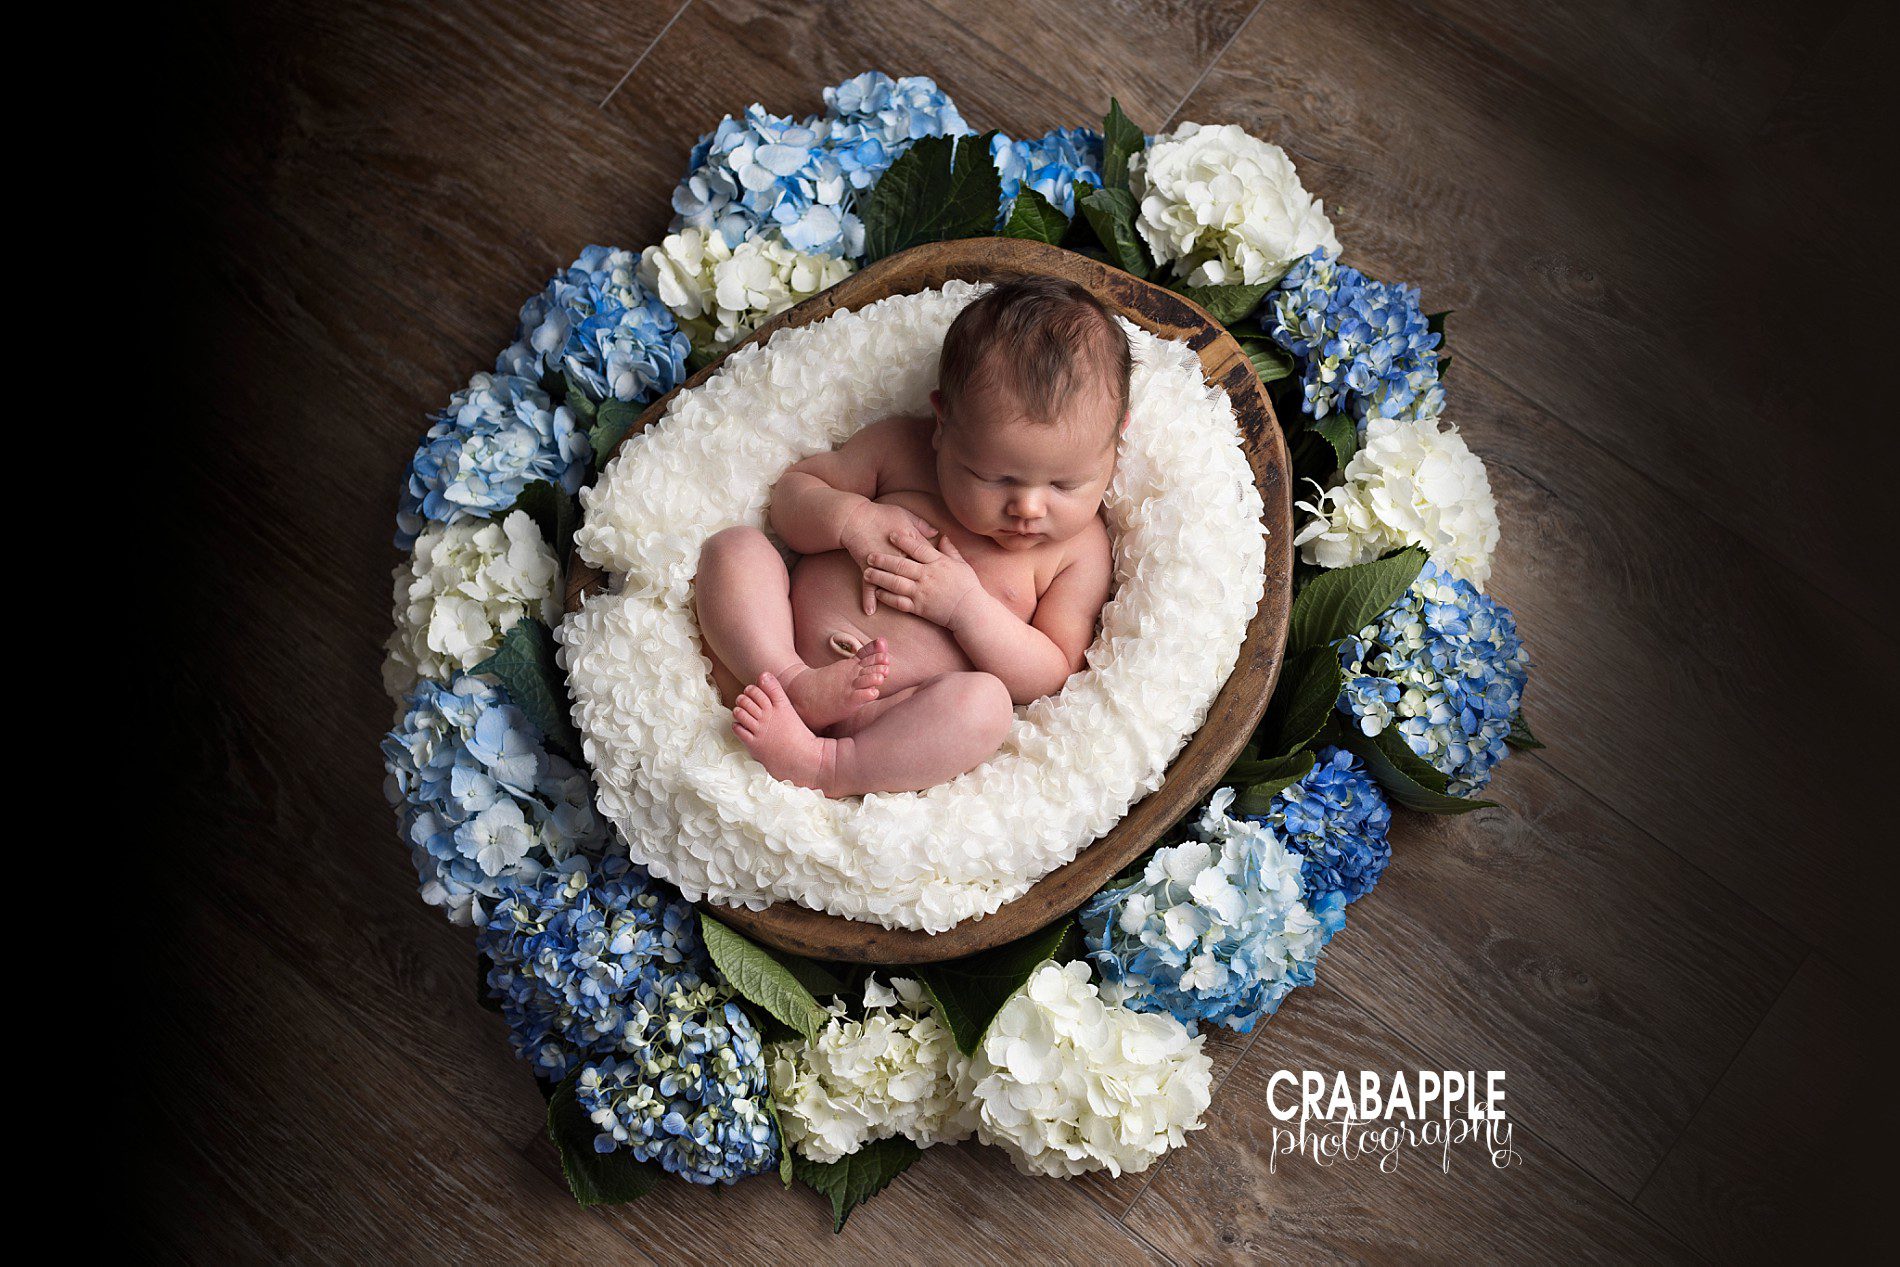 using hydrangeas in newborn photos